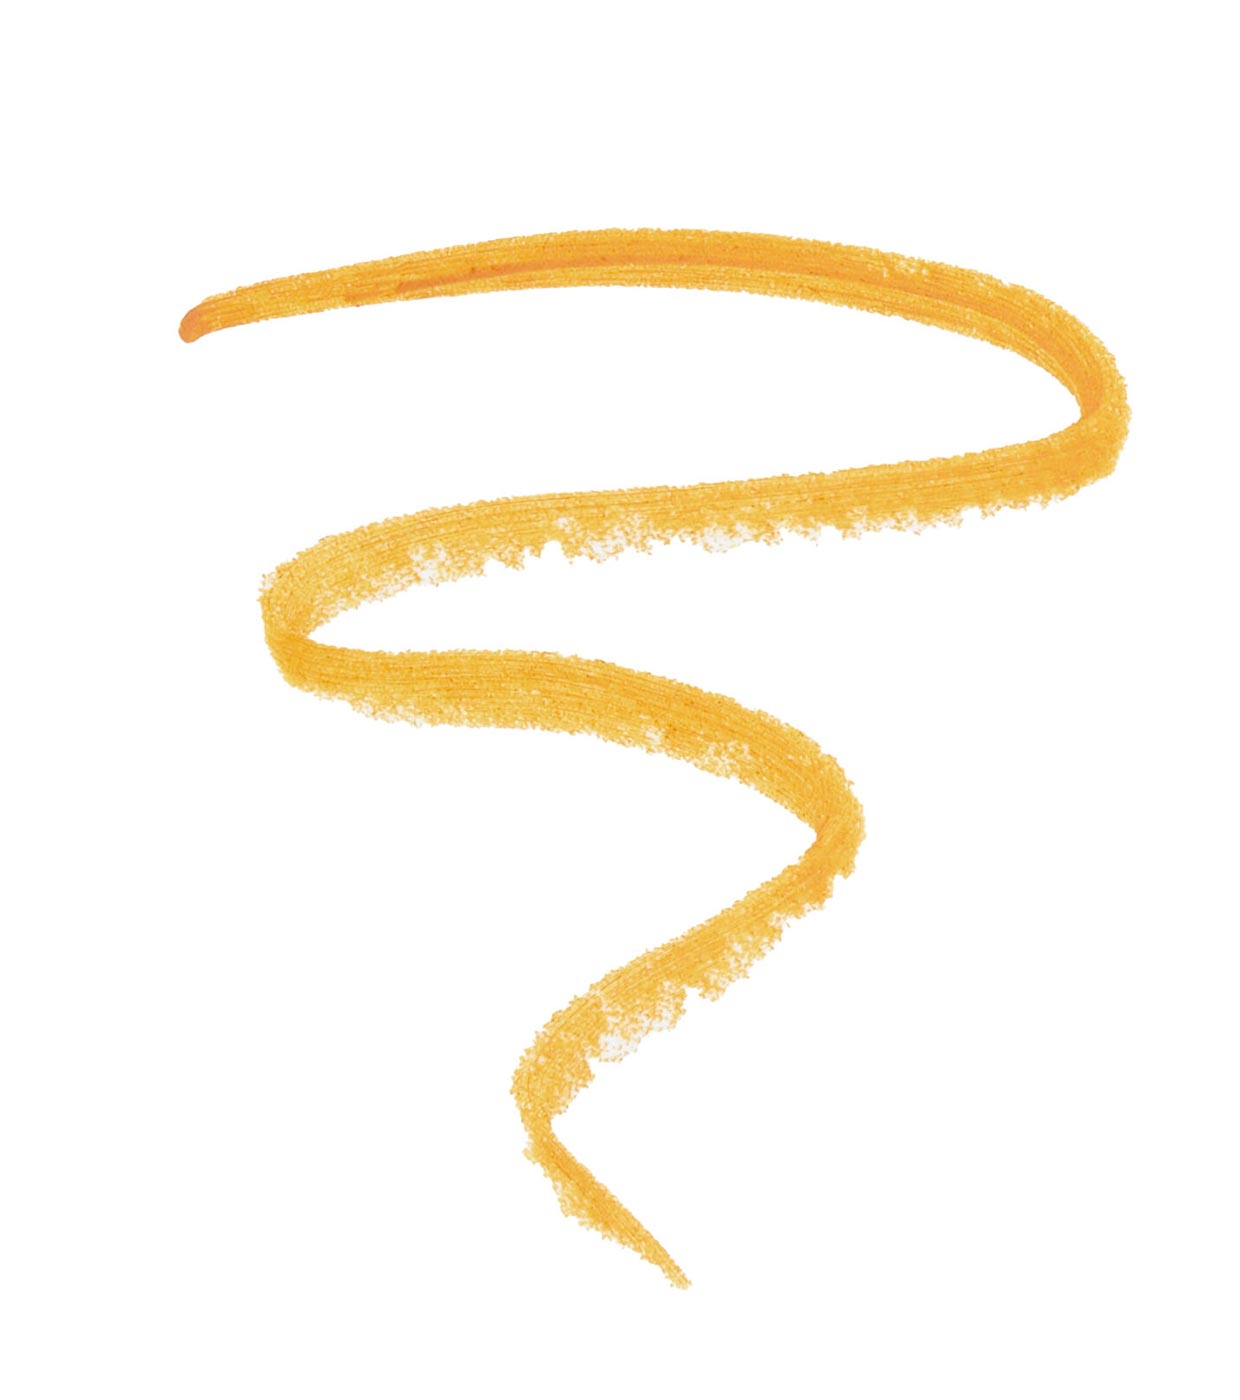 Revolution  - Delineador Streamline Waterline Eyeliner Pencil - Orange